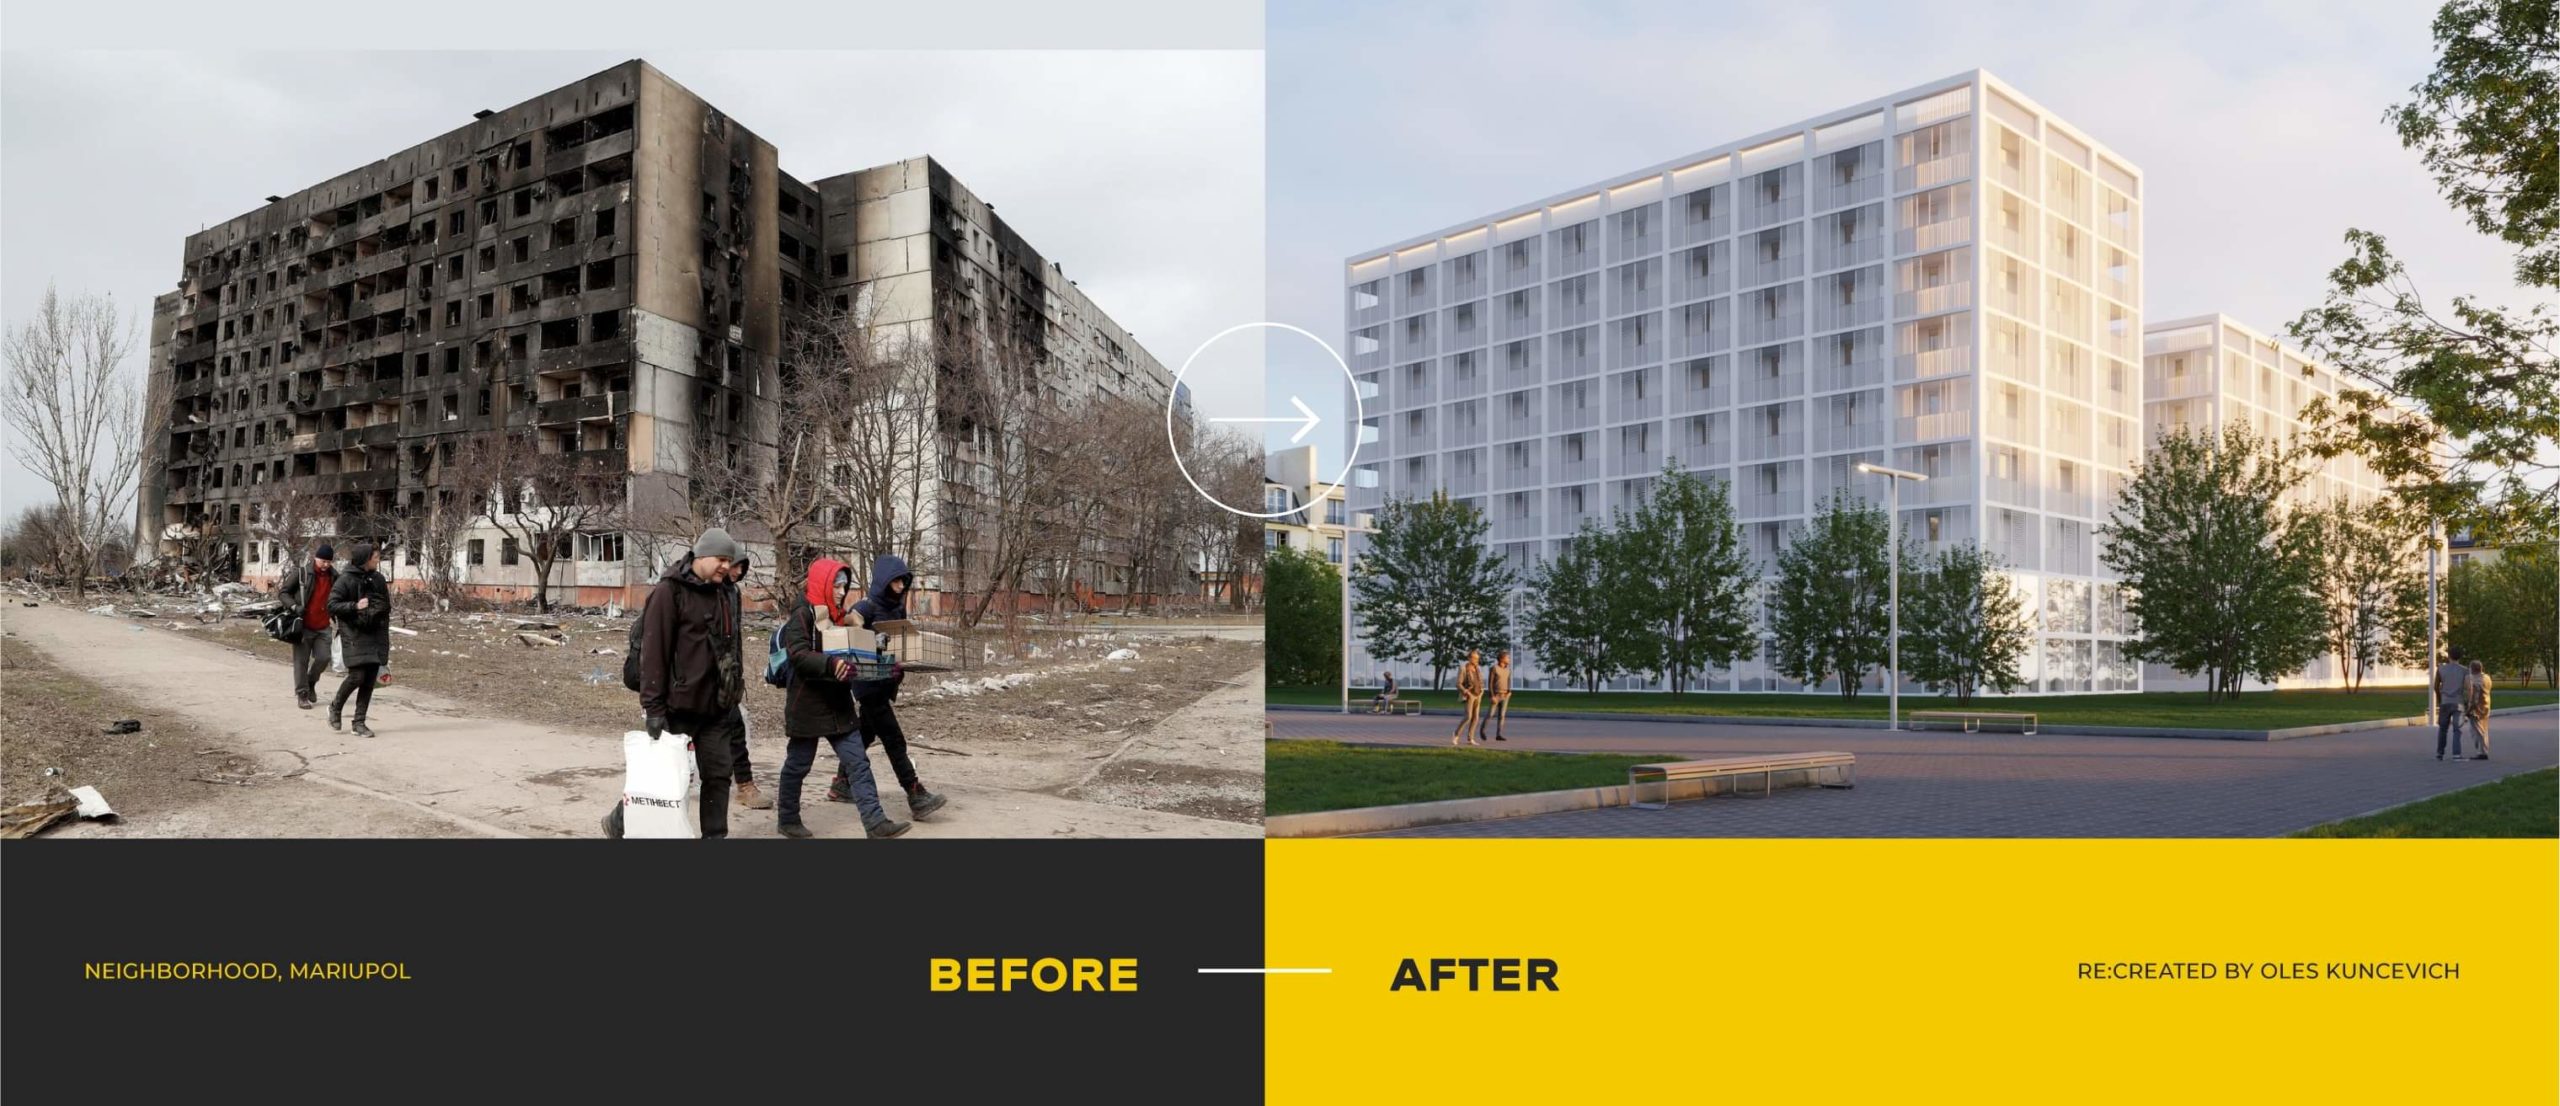 Ukraine demolished buildings